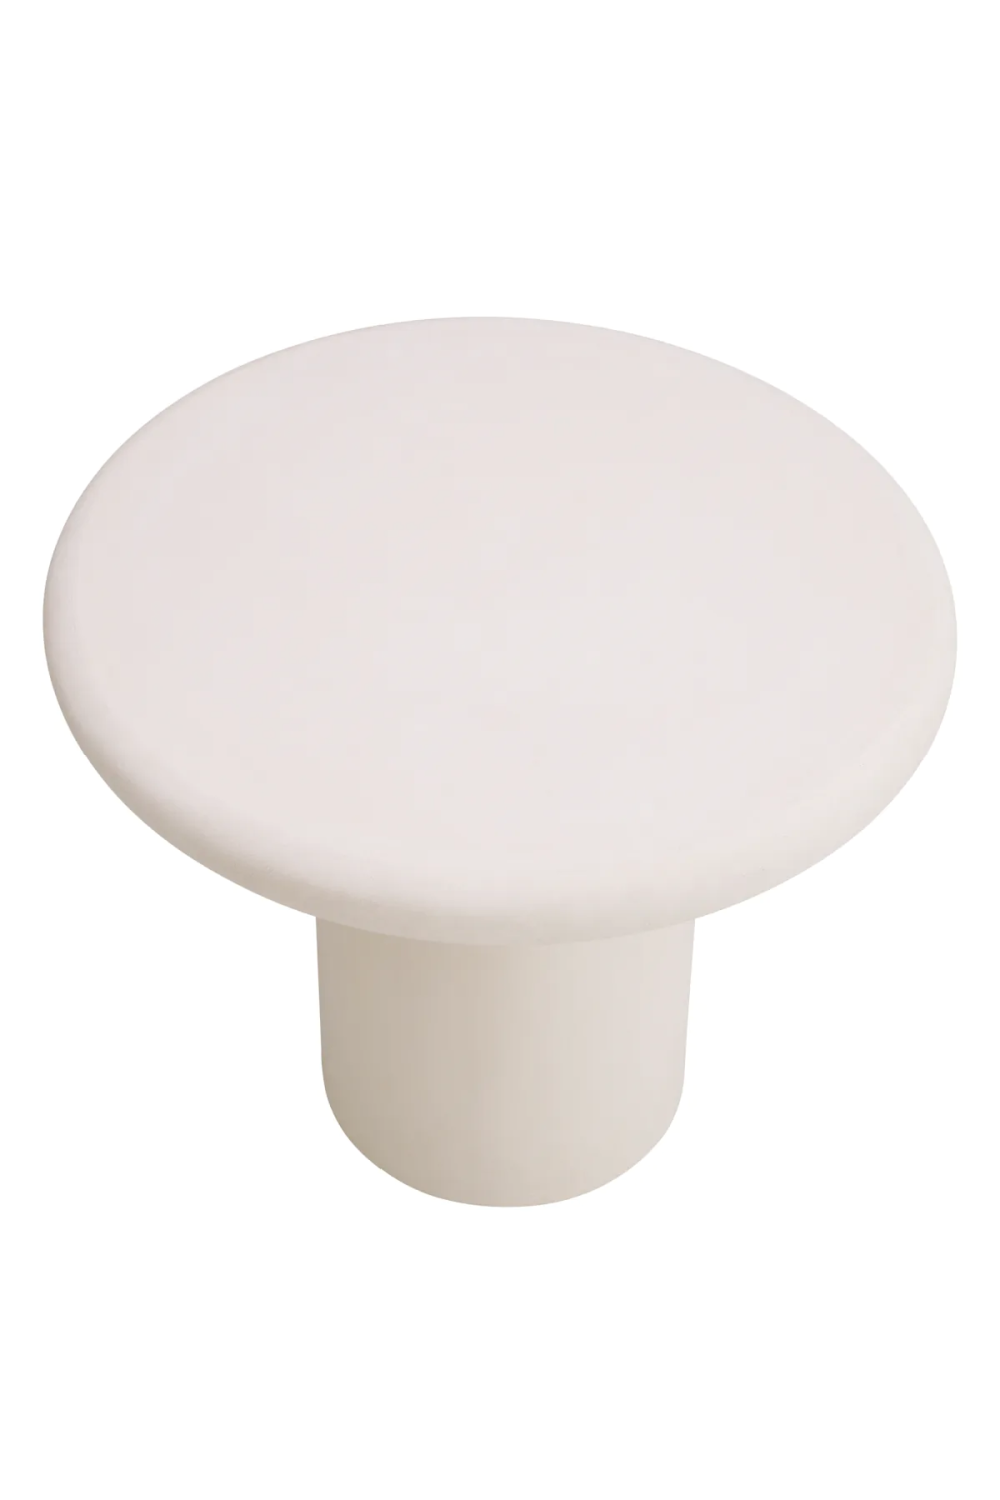 Cream Round Outdoor Side Table | Eichholtz Vitalis | Oroa.com